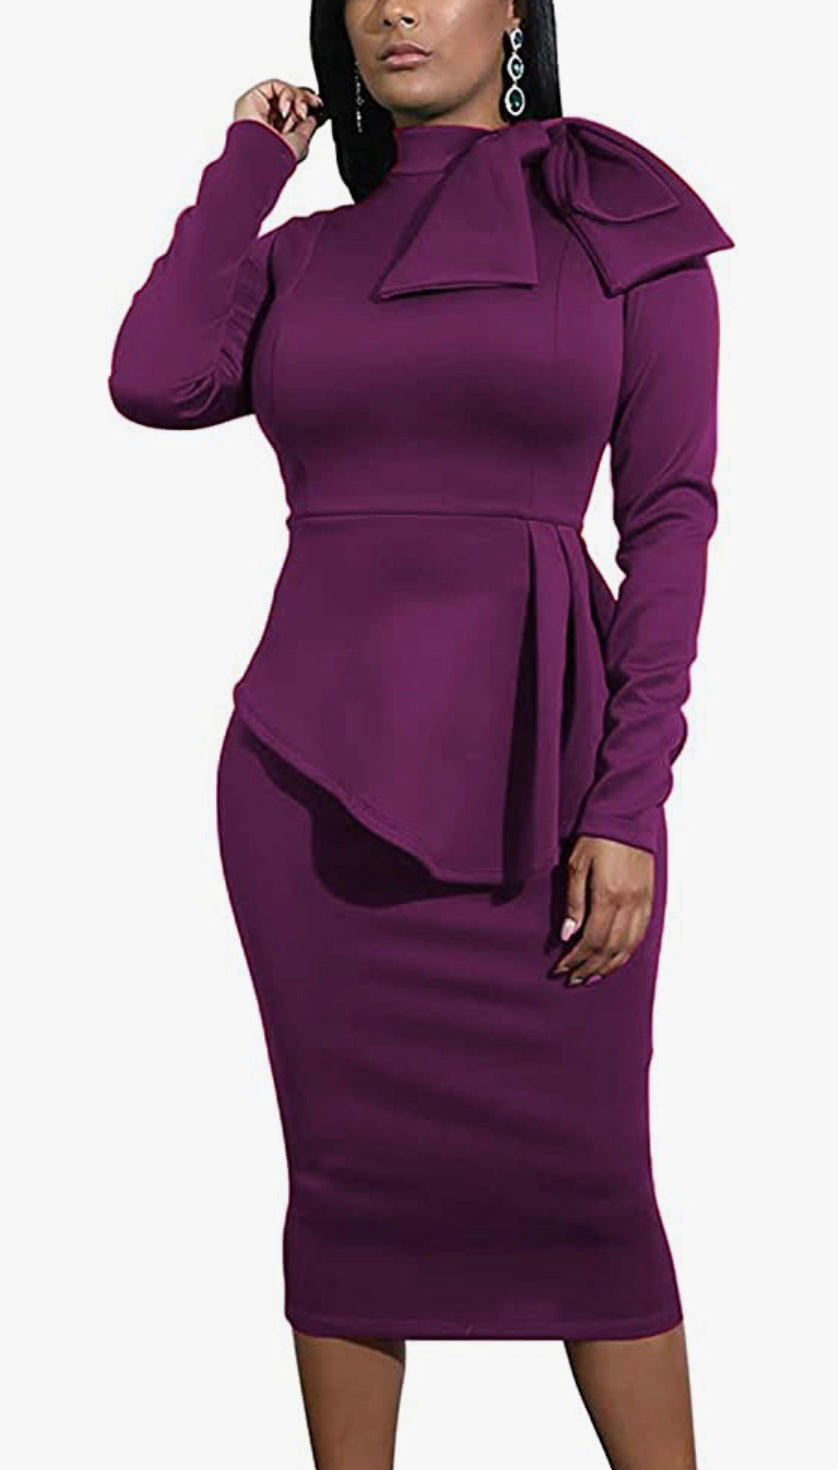 Peplum Short Sleeve Bow Knot Dress, US Sizes 4 - 20 (Small - 2XLarge) Rose or Purple